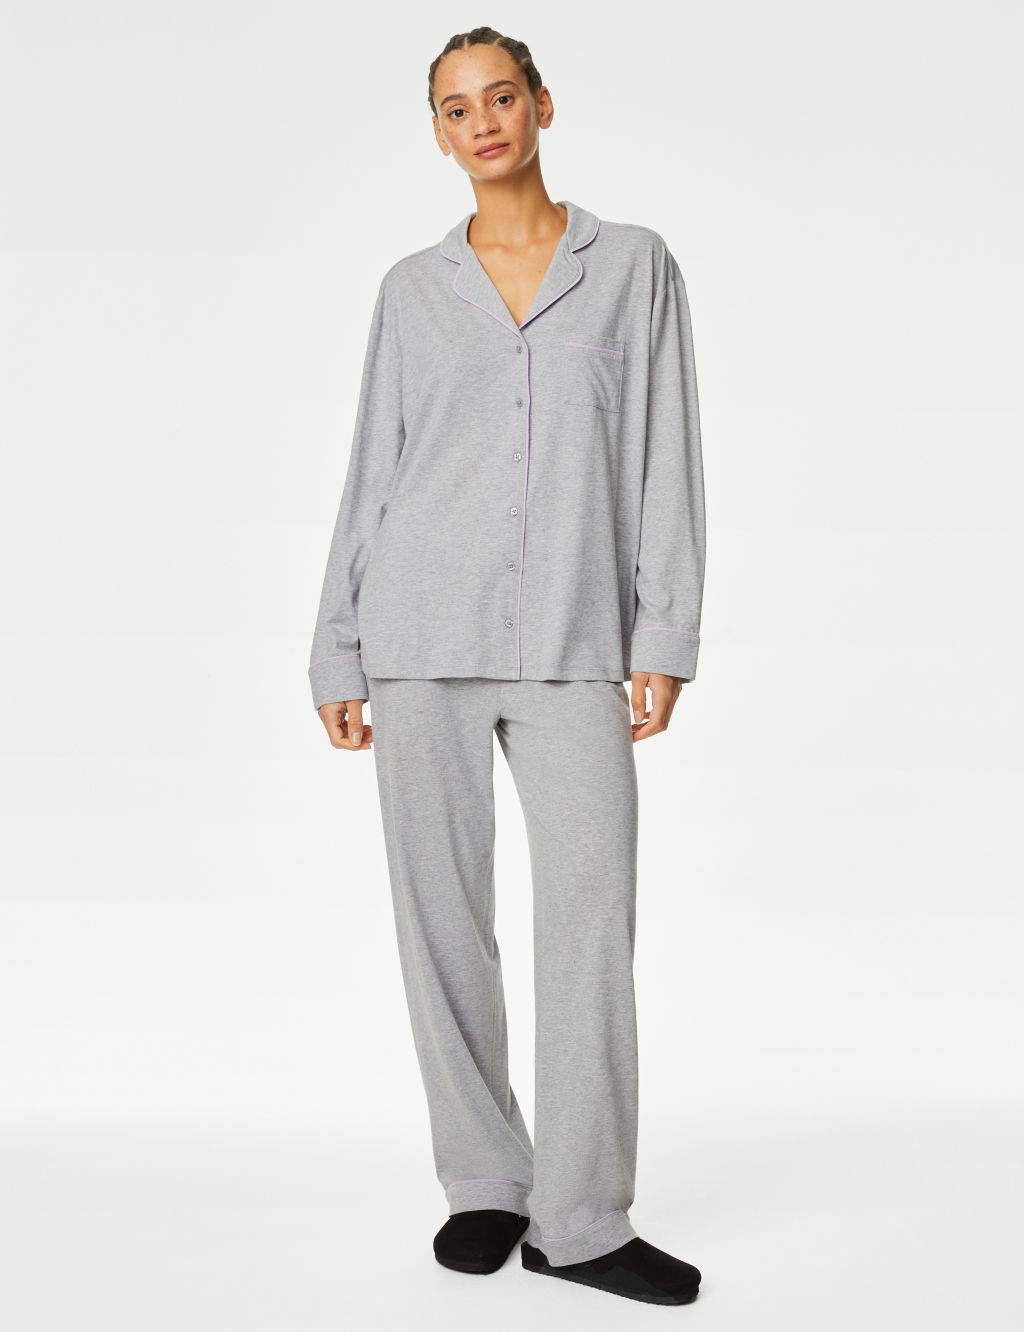 Cool Comfort™ Modal Pyjama image 3